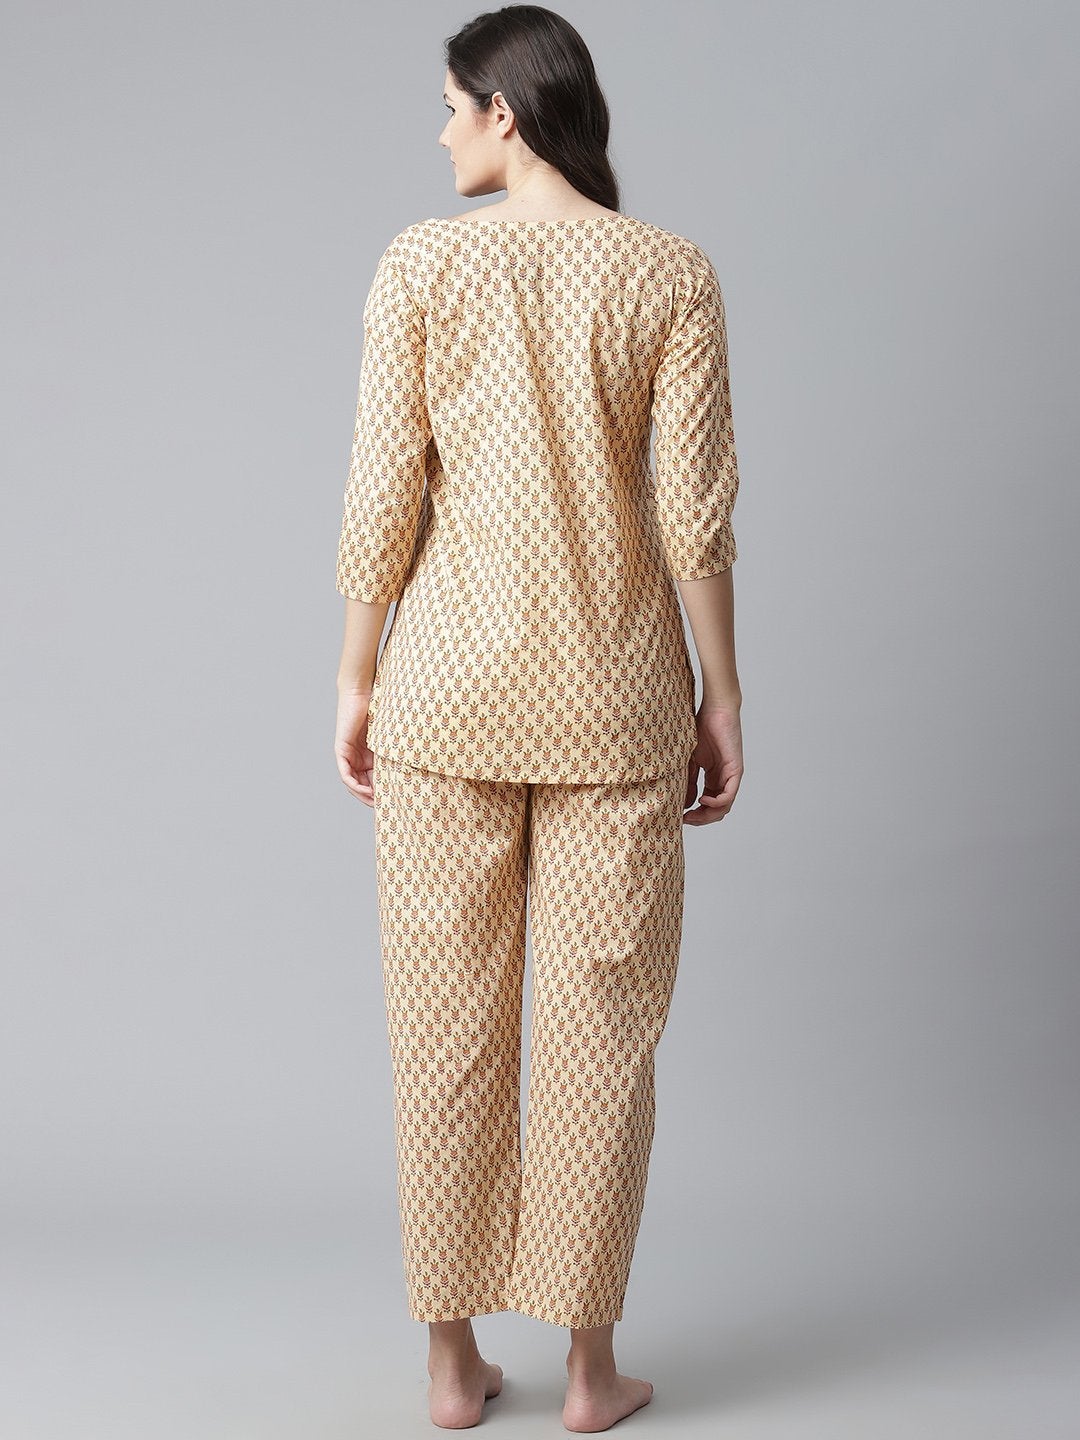 Women's Yellow Buti Print Cotton Nightwear - Noz2Toz